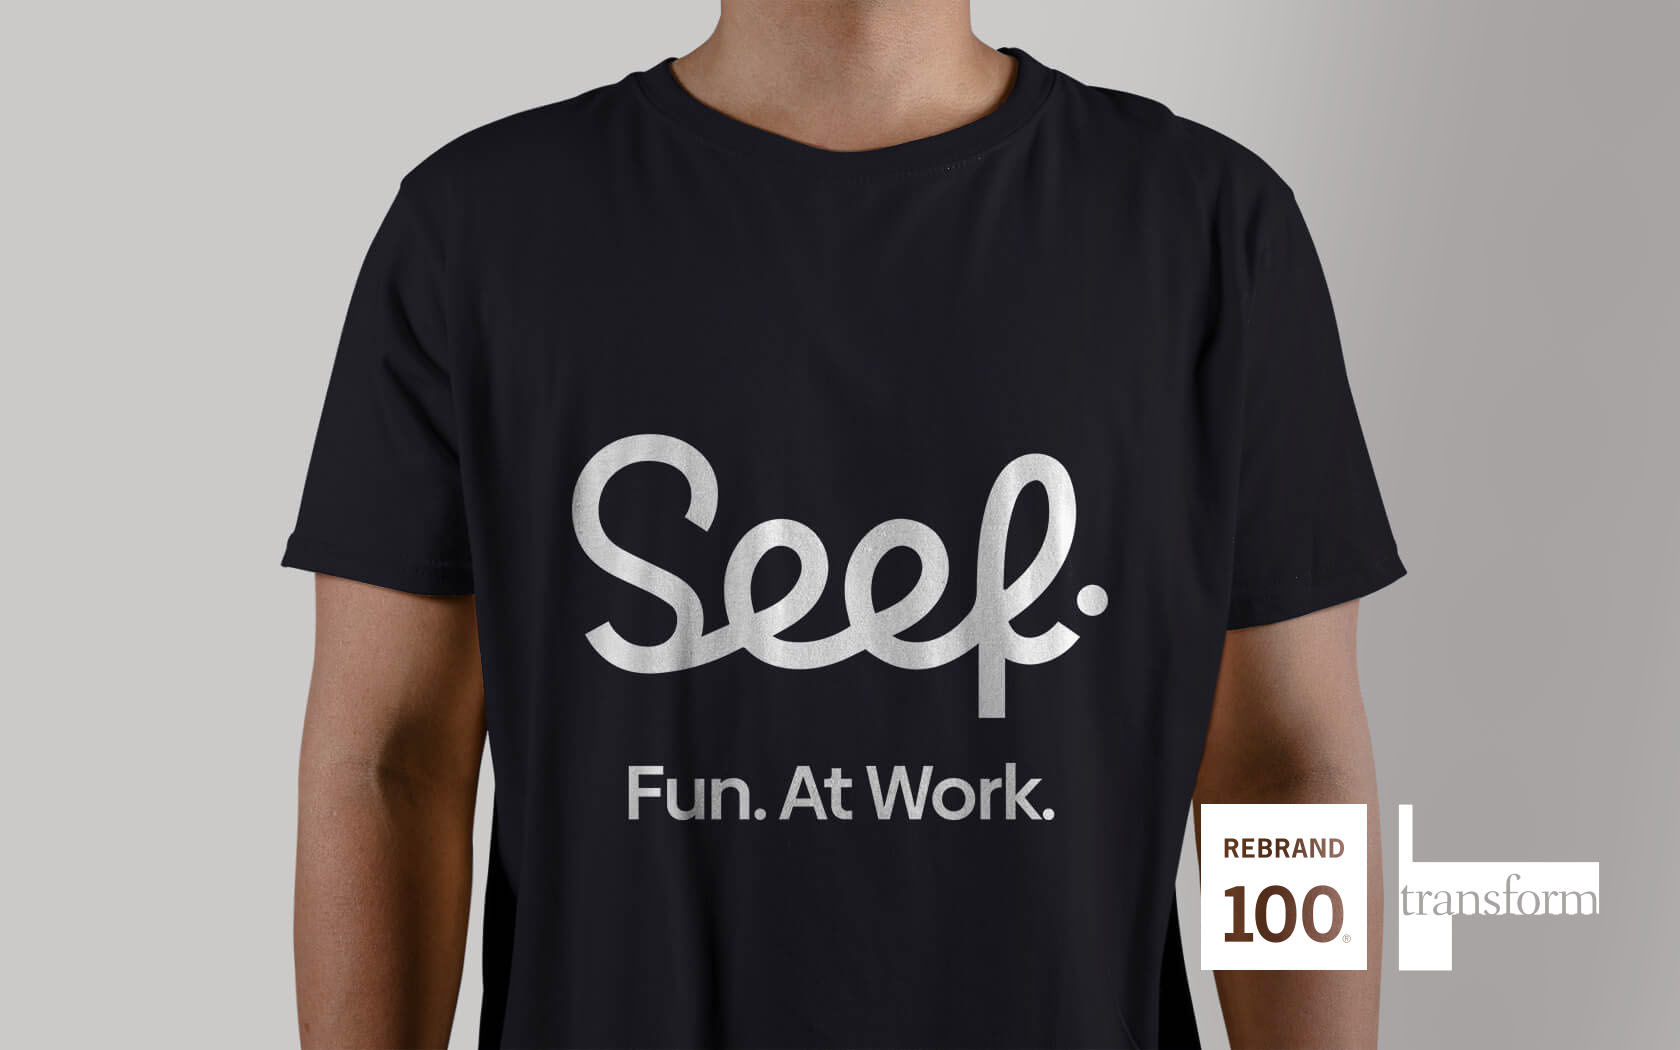 Seef. Branded t-shirt